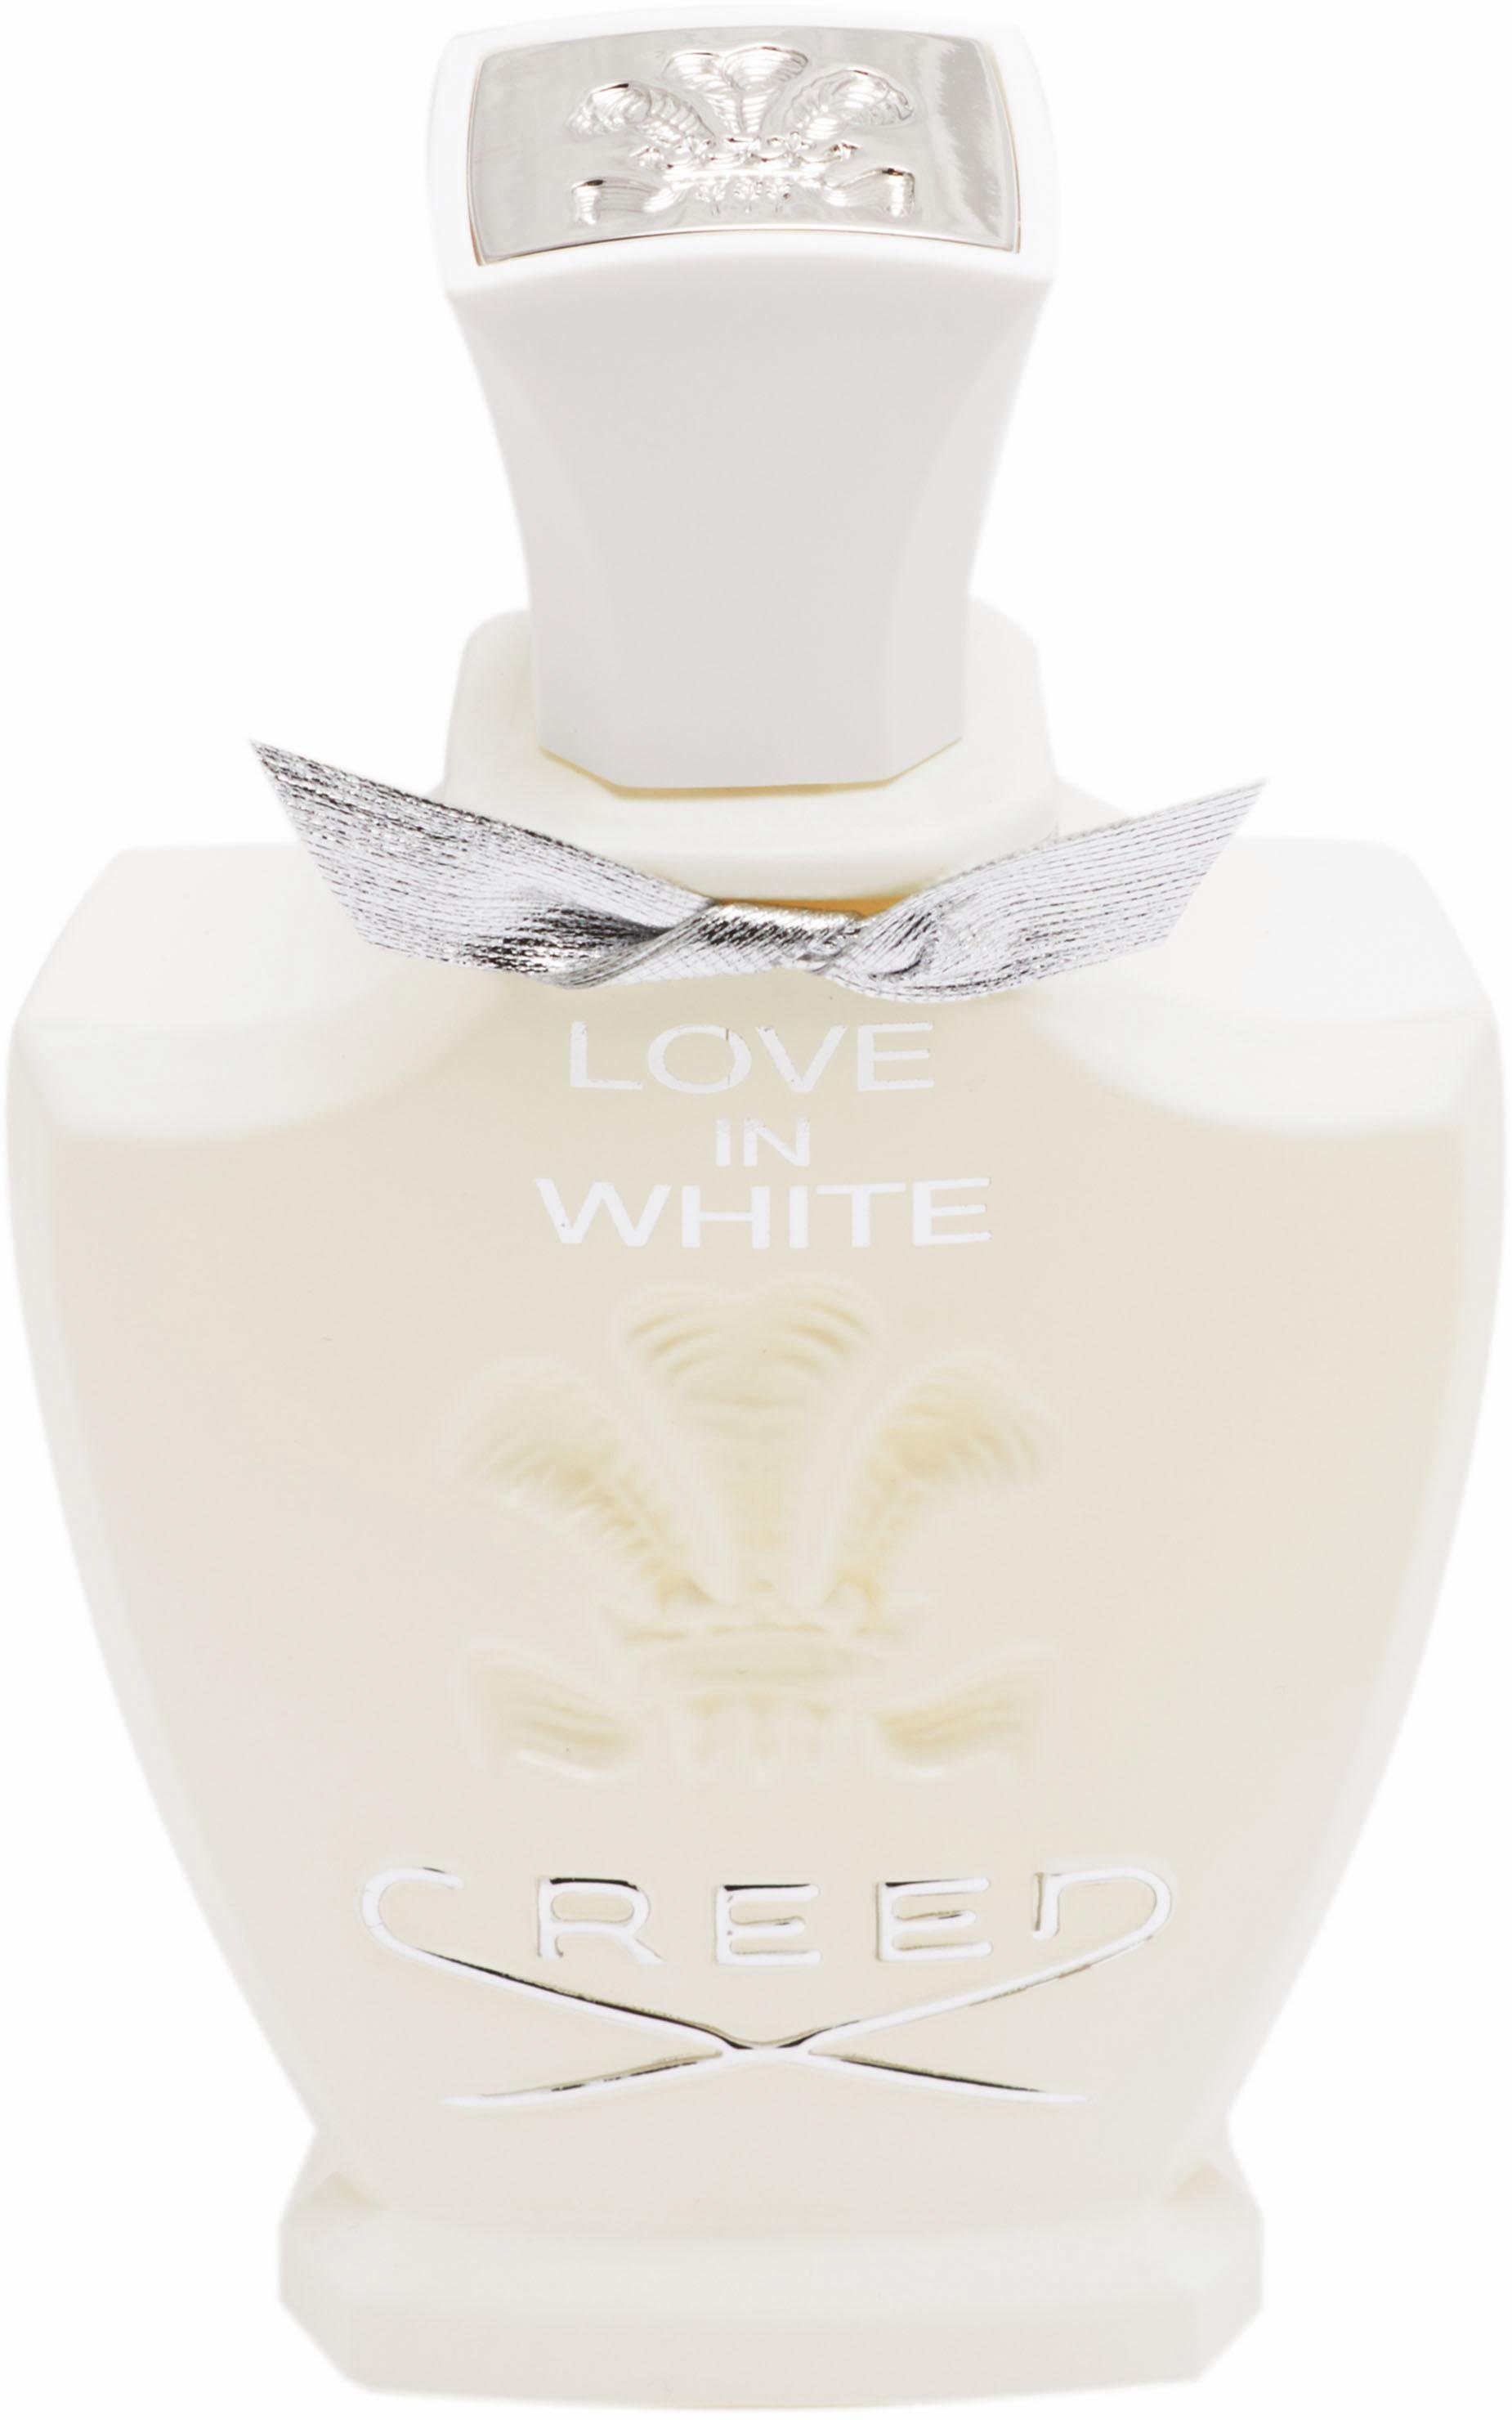 in Love Parfum de Eau Creed White